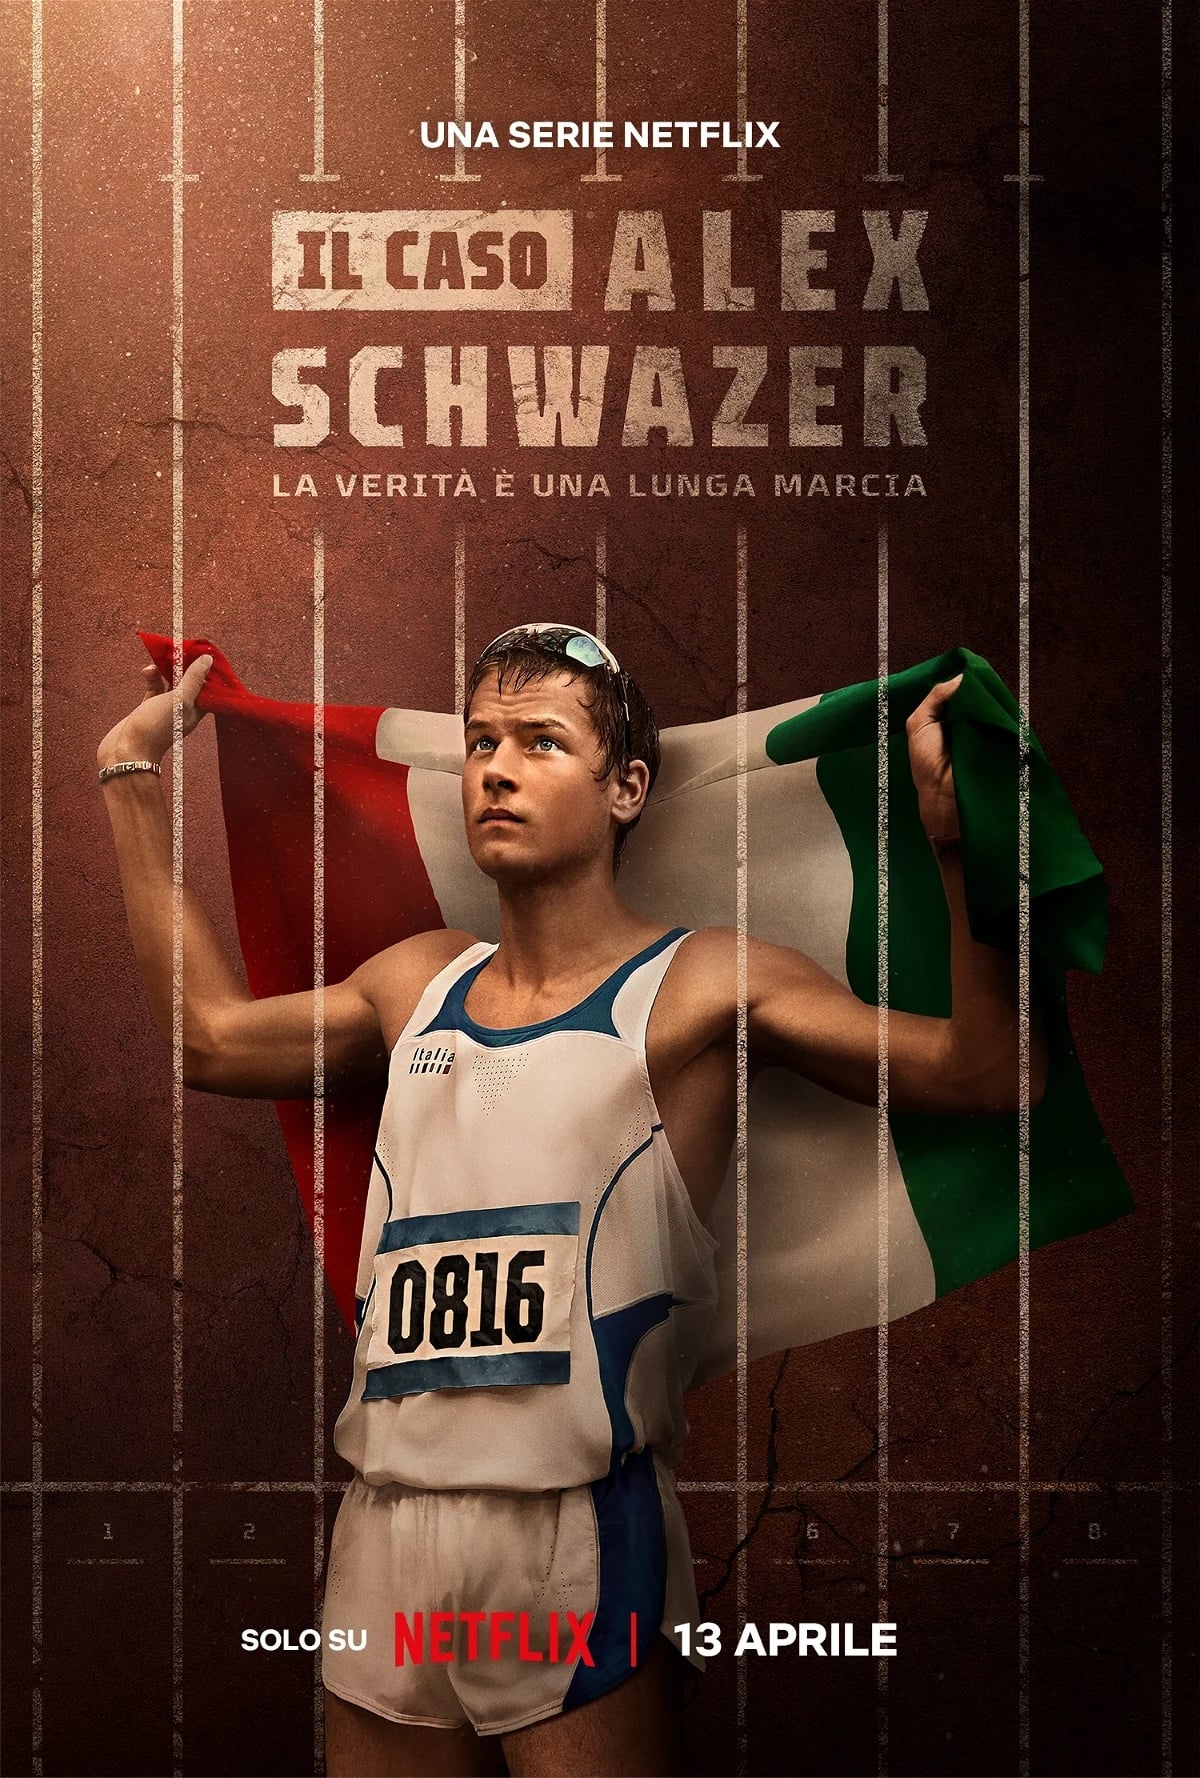 TV ratings for Running For The Truth: Alex Schwazer (Il Caso Alex Schwazer) in India. Netflix TV series